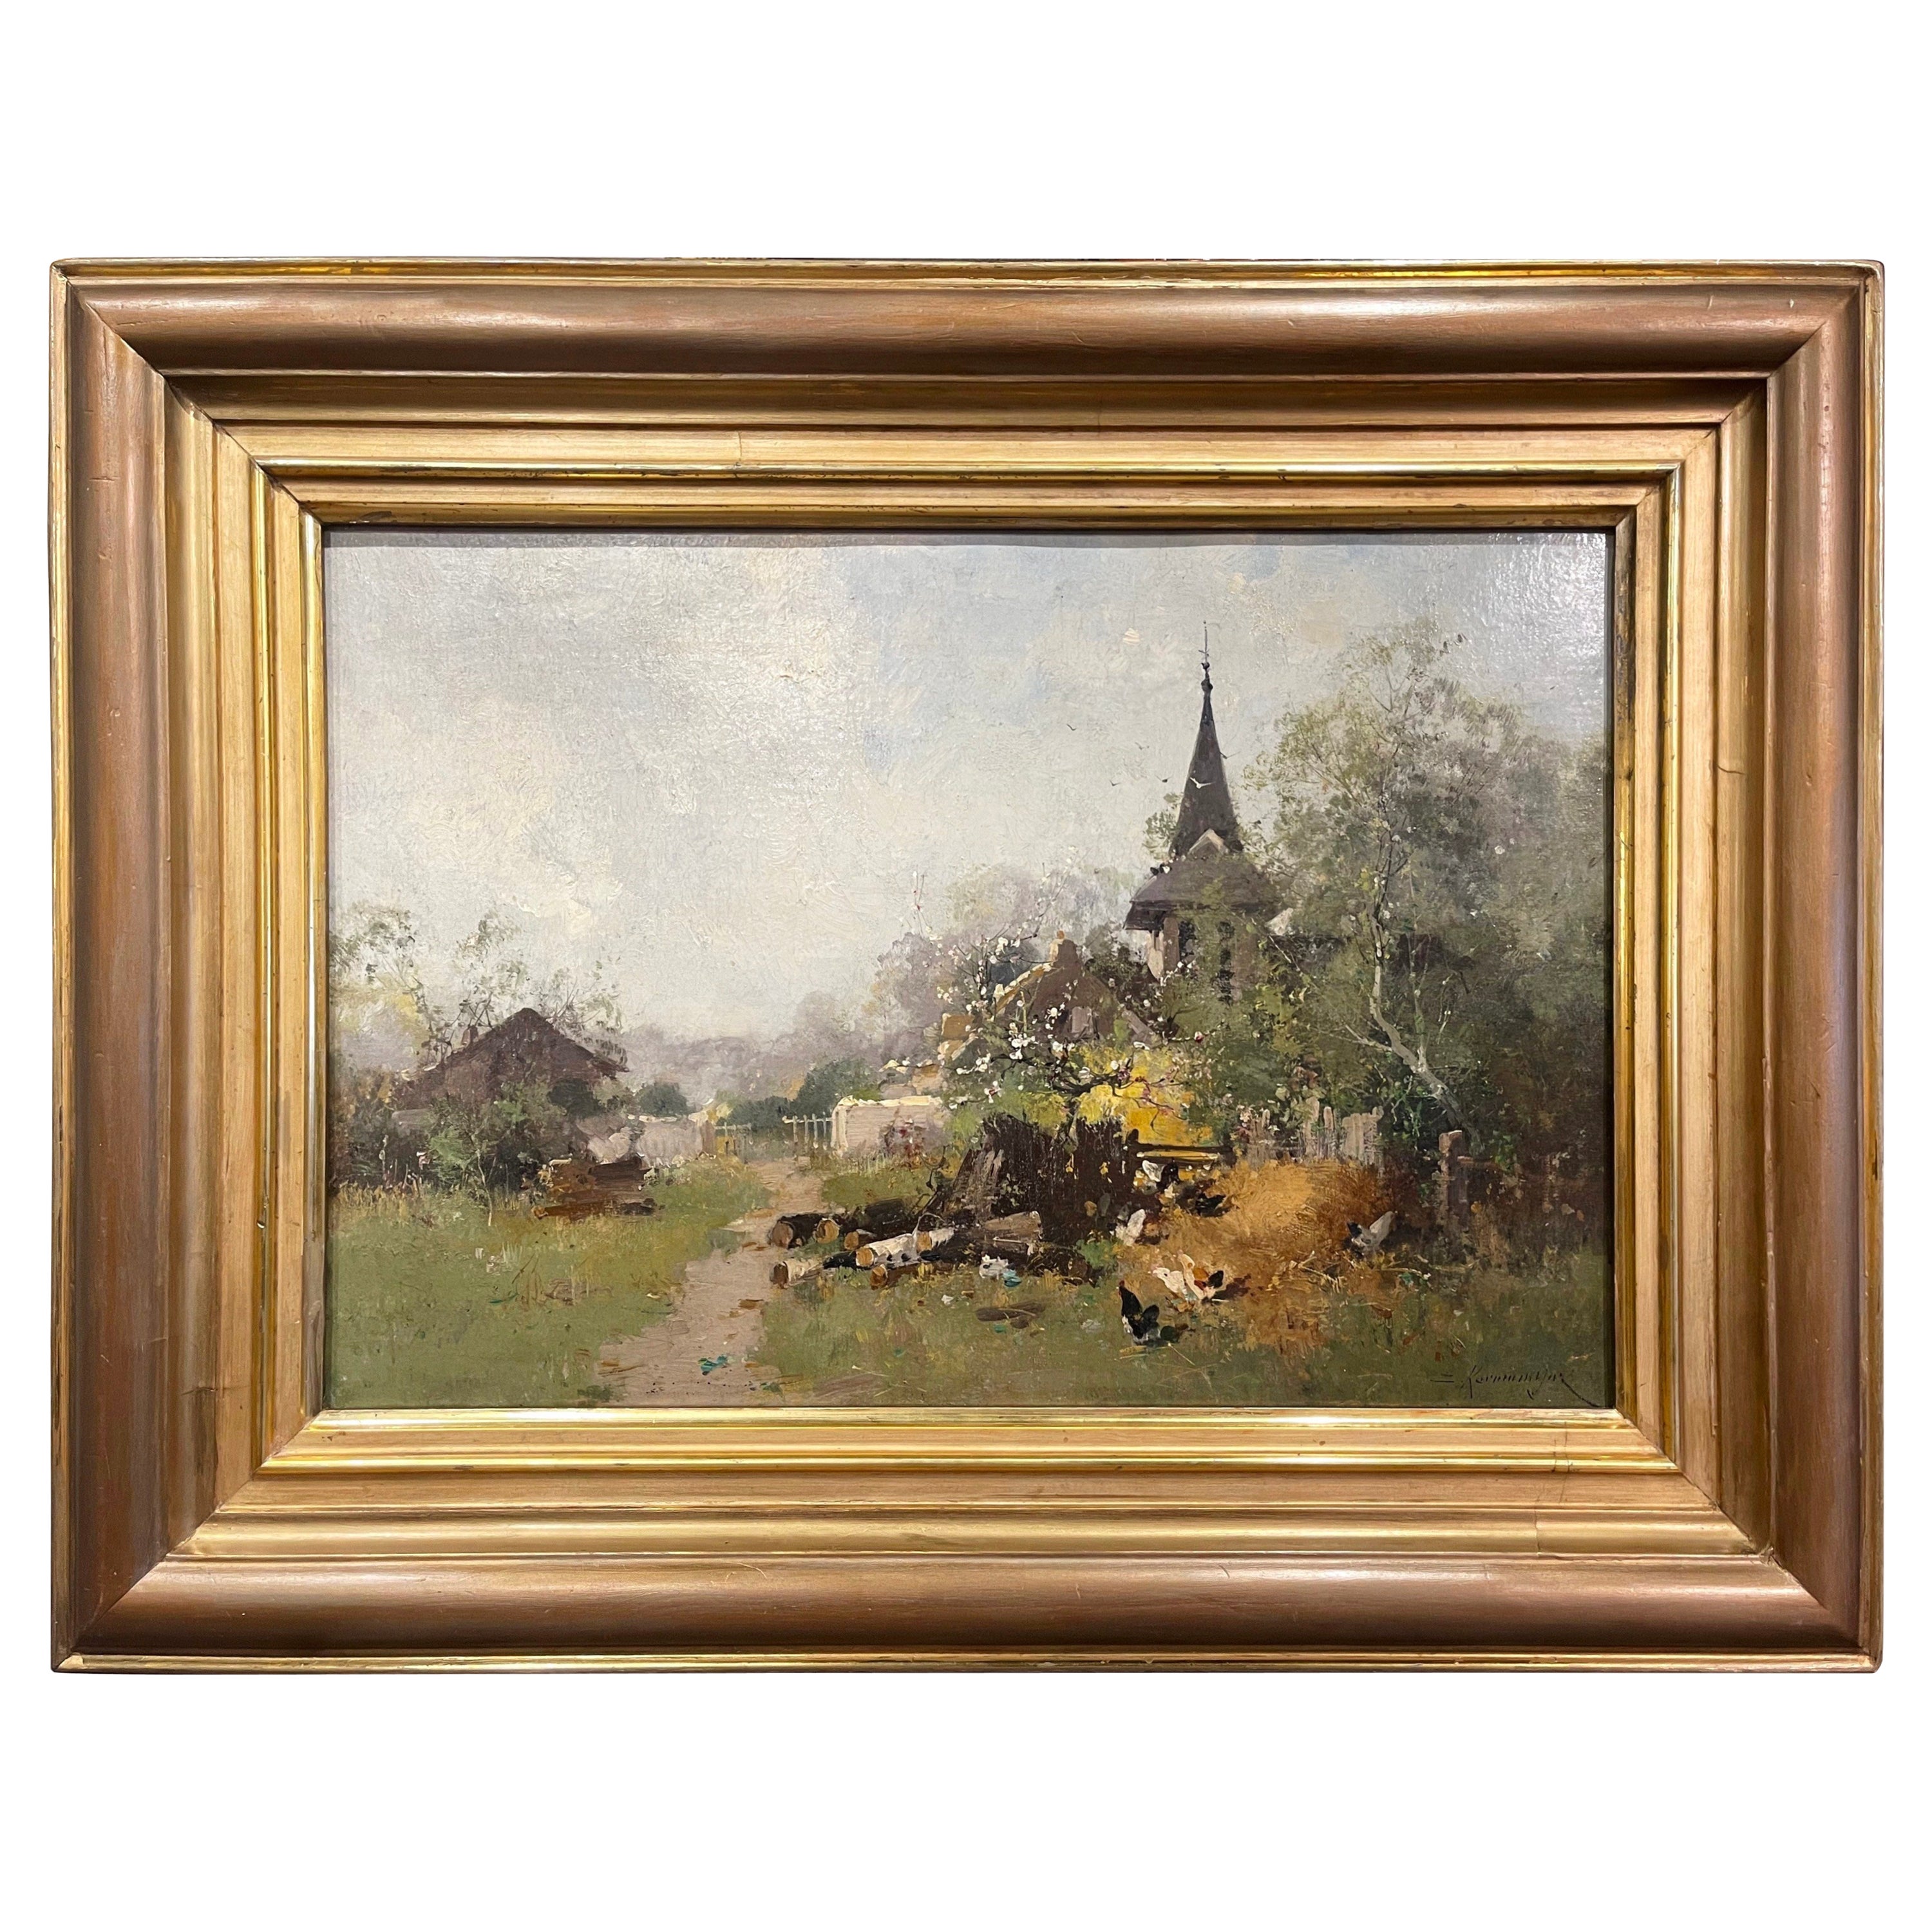  19th Century Framed Farmyard Oil Painting Signed Kermanguy for E. Galien-Laloue